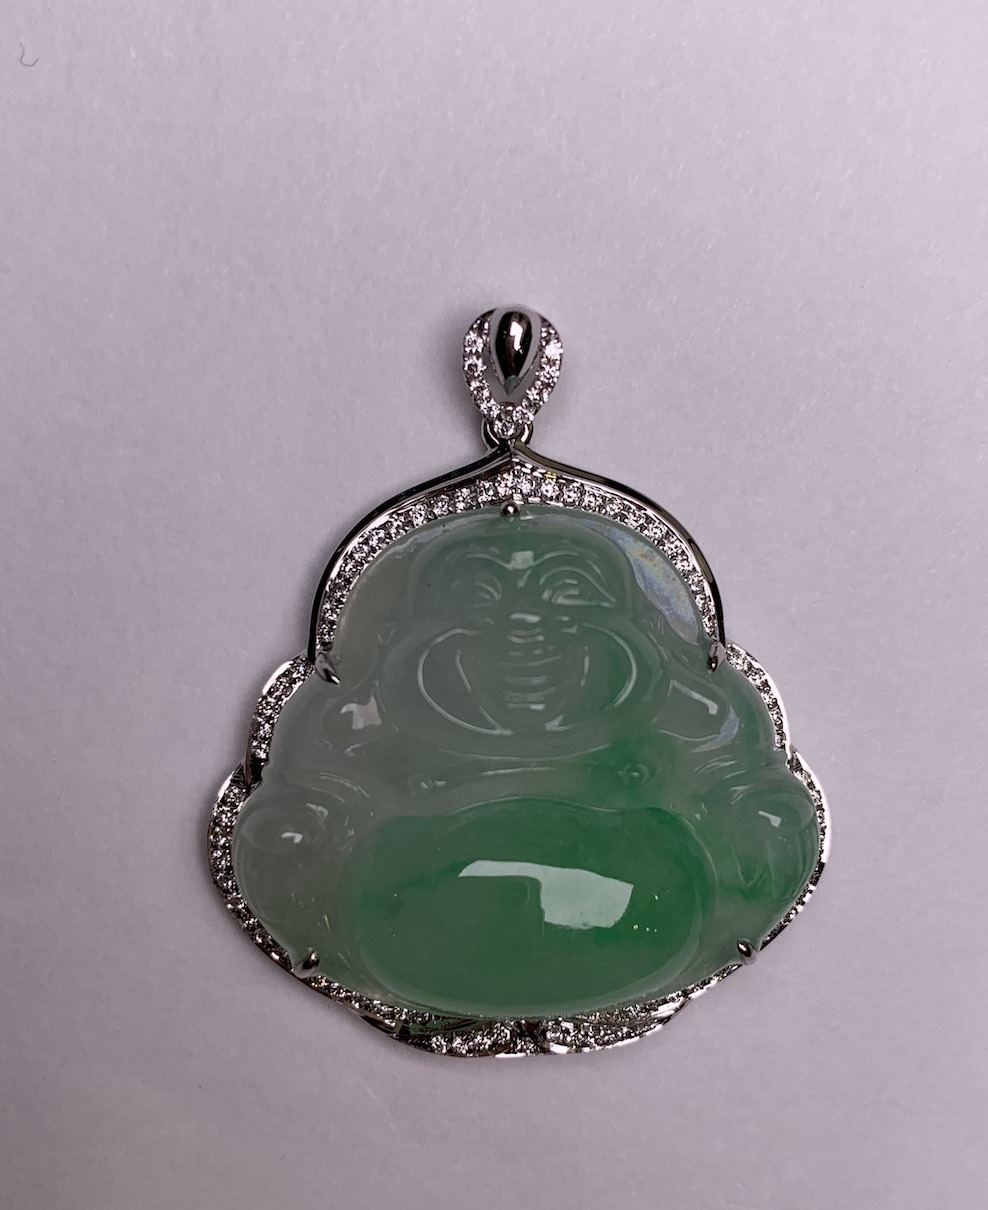 Highly translucent icy green laughing buddha jadeite pendant - Nanyang ...